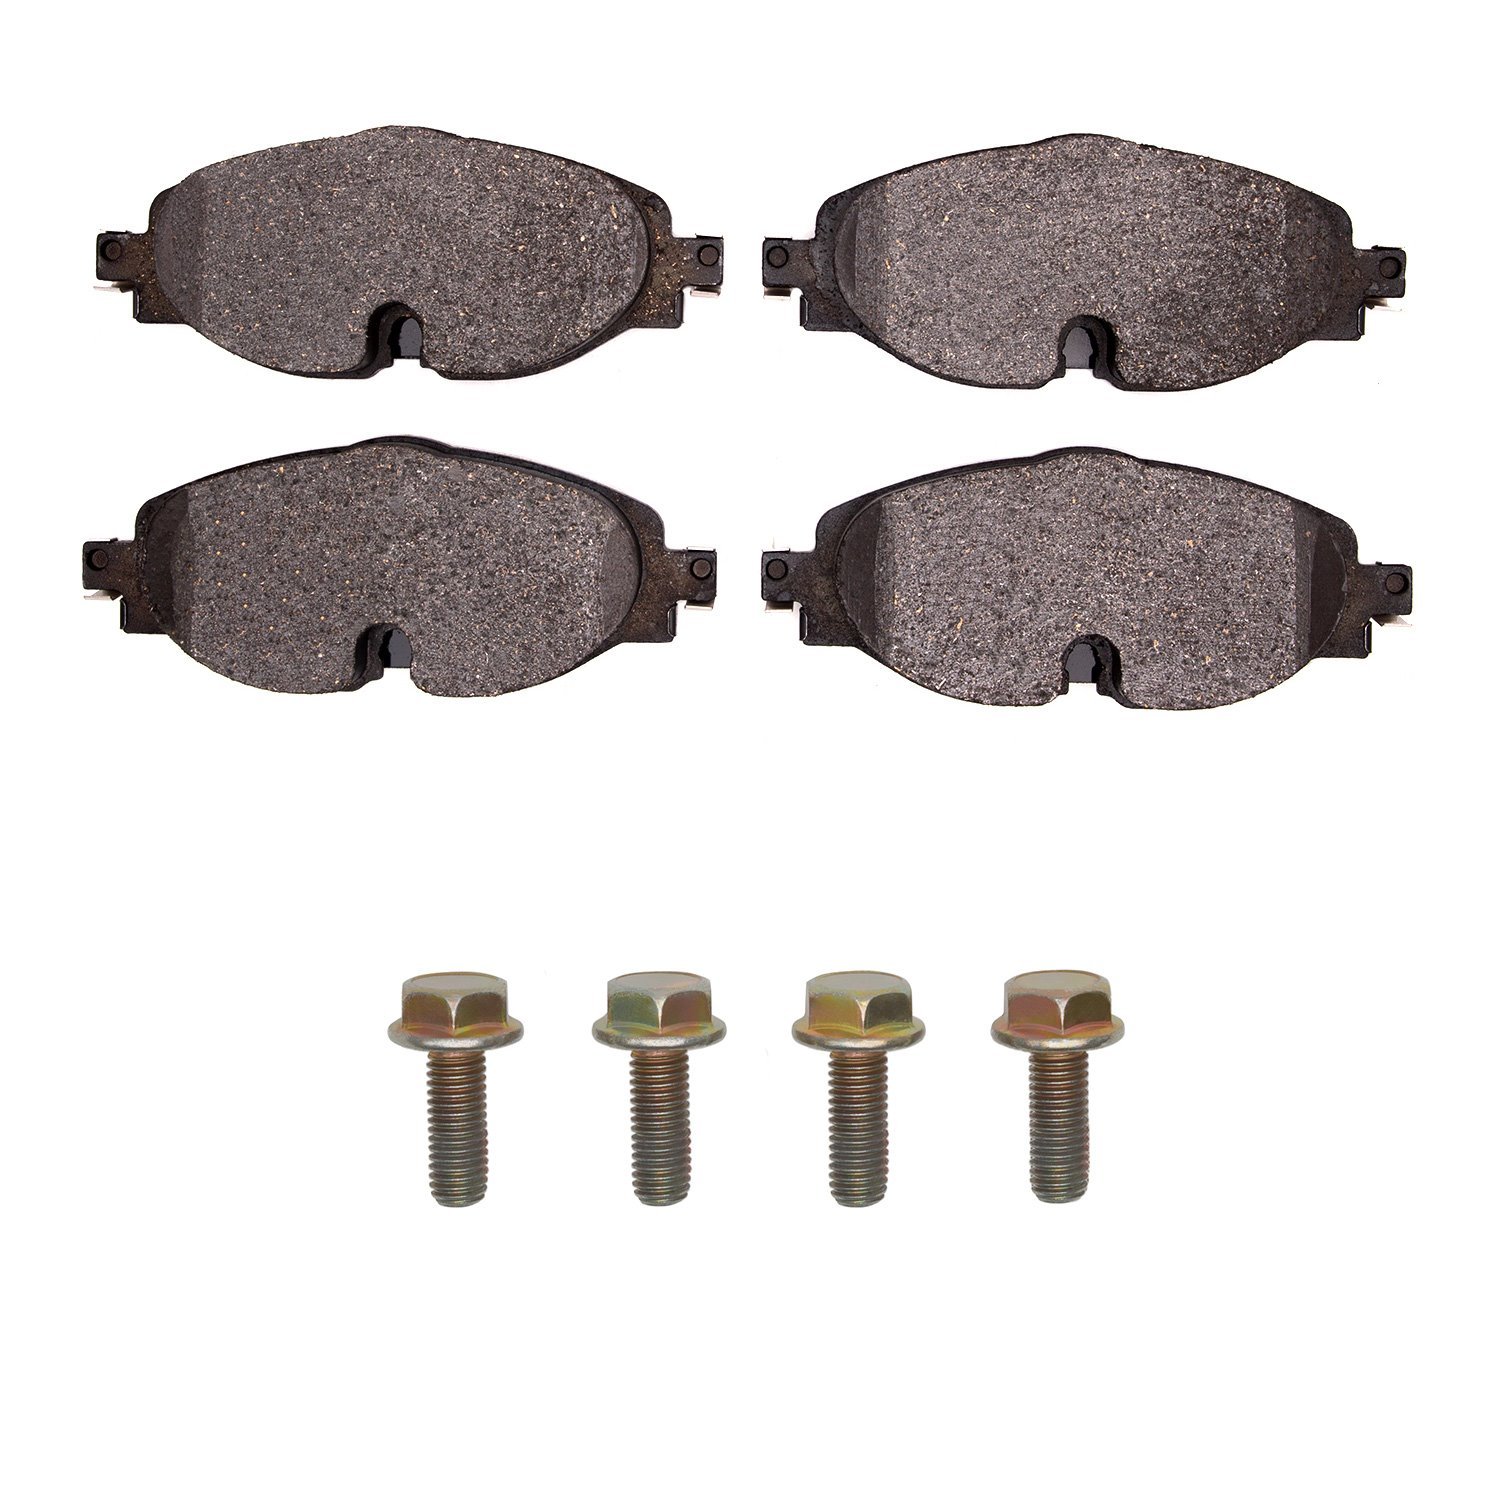 1551-1760-01 5000 Advanced Ceramic Brake Pads & Hardware Kit, Fits Select Multiple Makes/Models, Position: Front